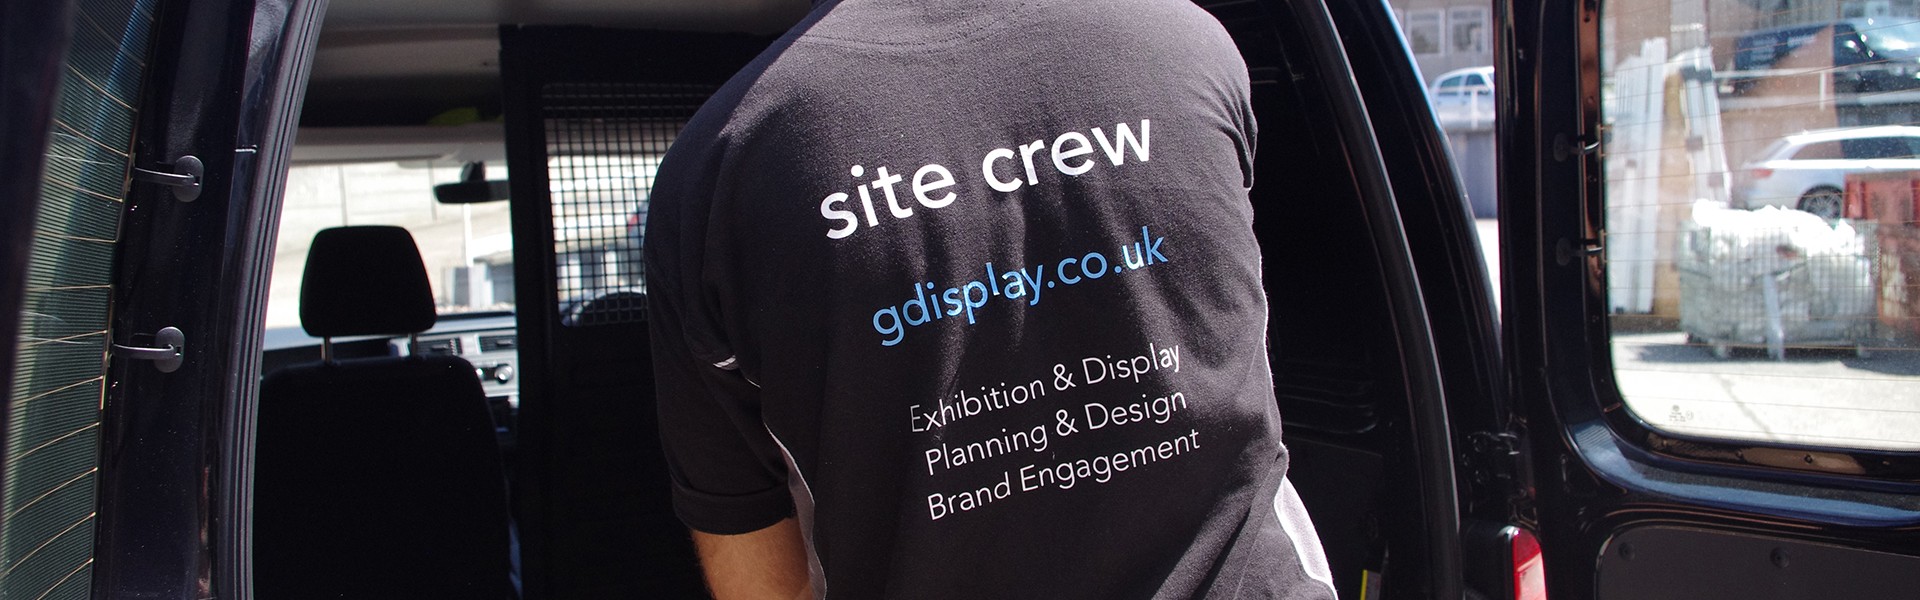 Site crew - Guardian Display